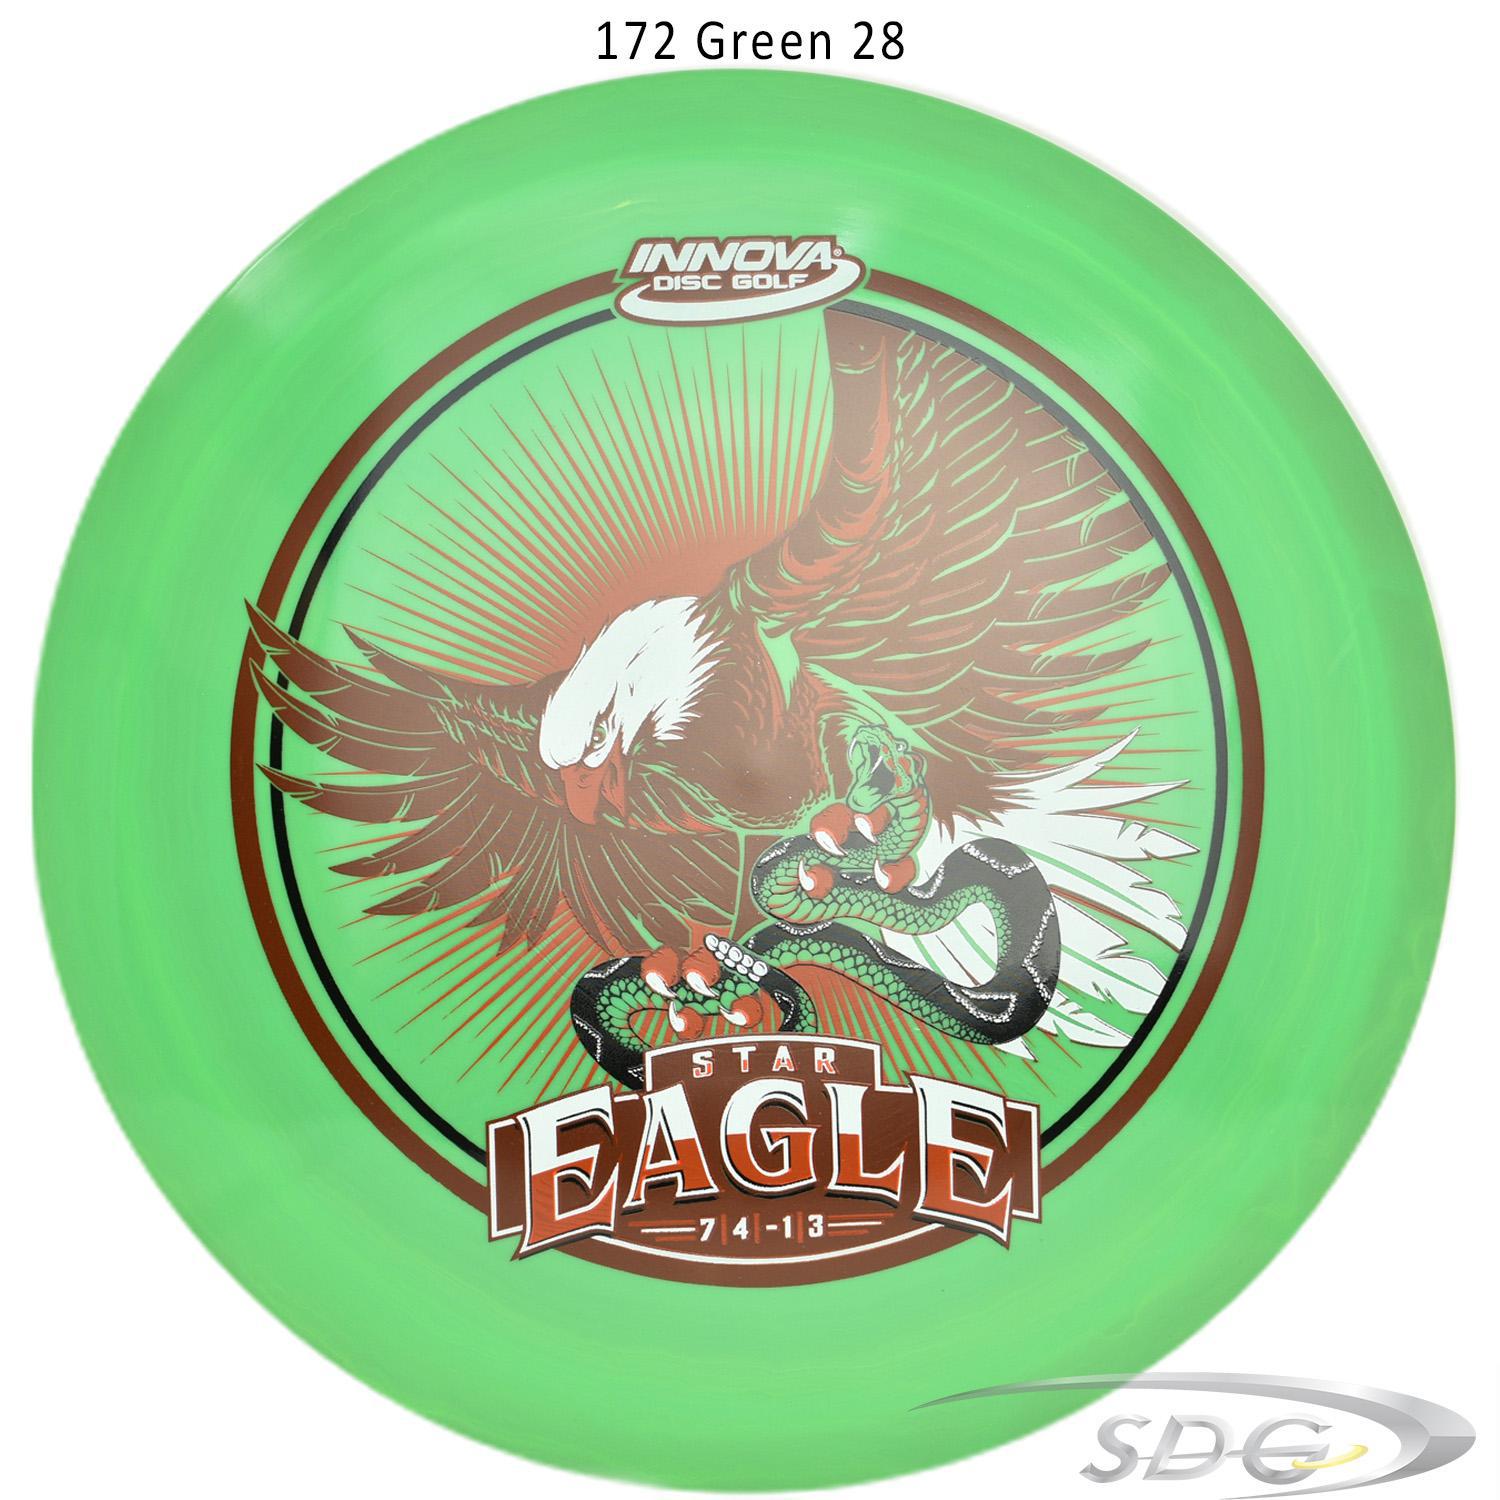 innova-star-eagle-disc-golf-fairway-driver 172 Green 28 